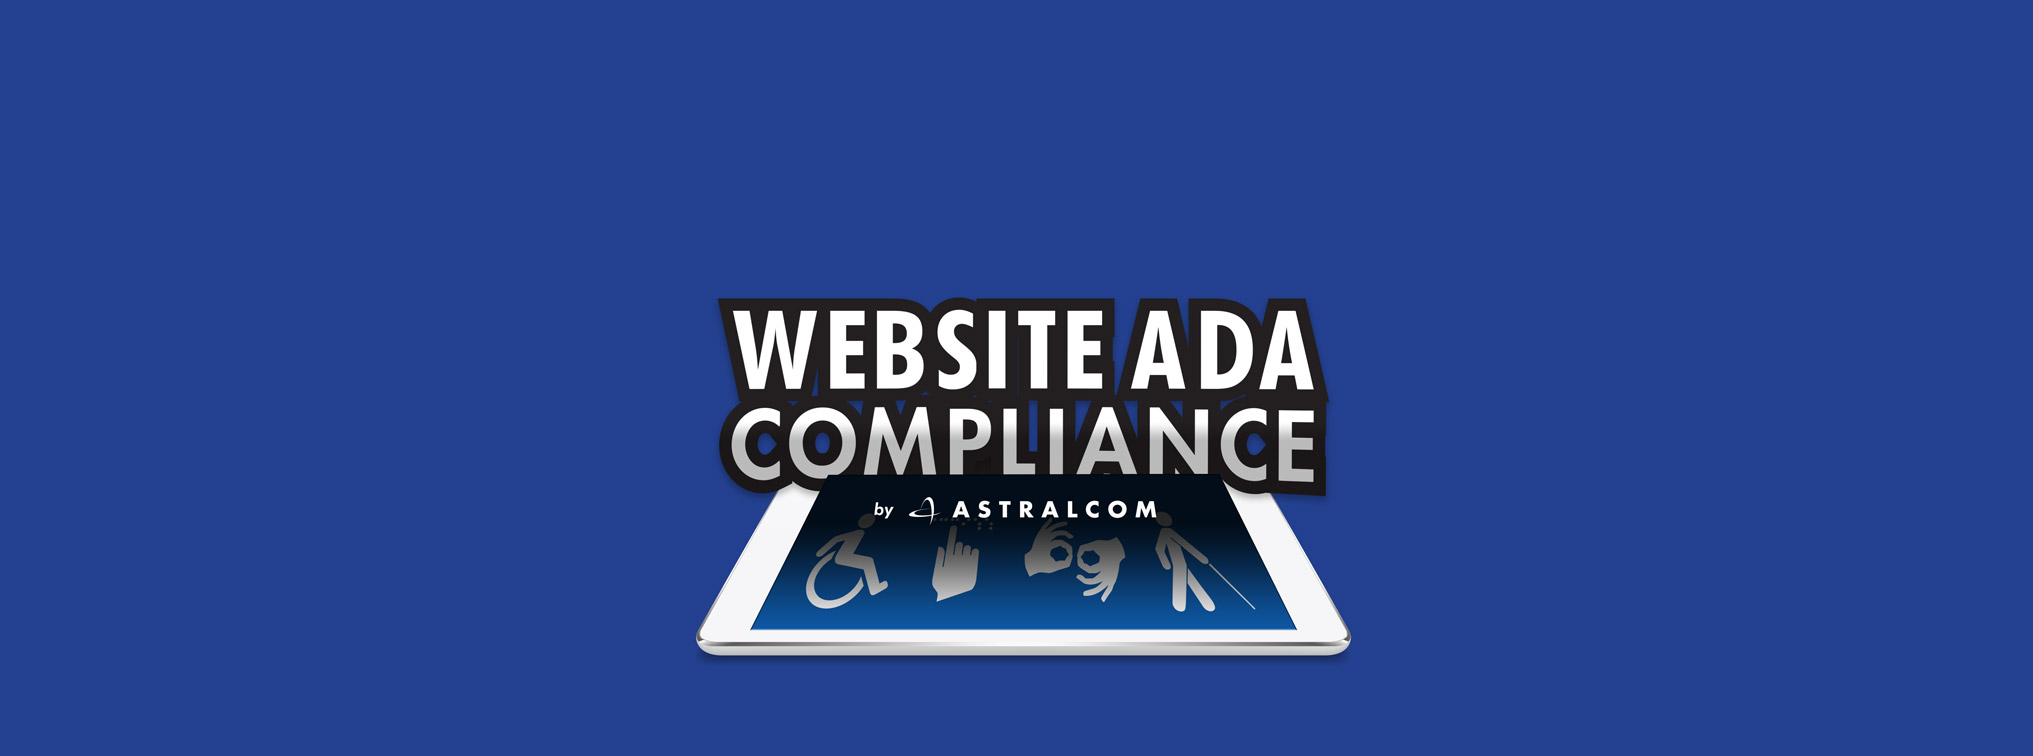 Website ADA Compliance